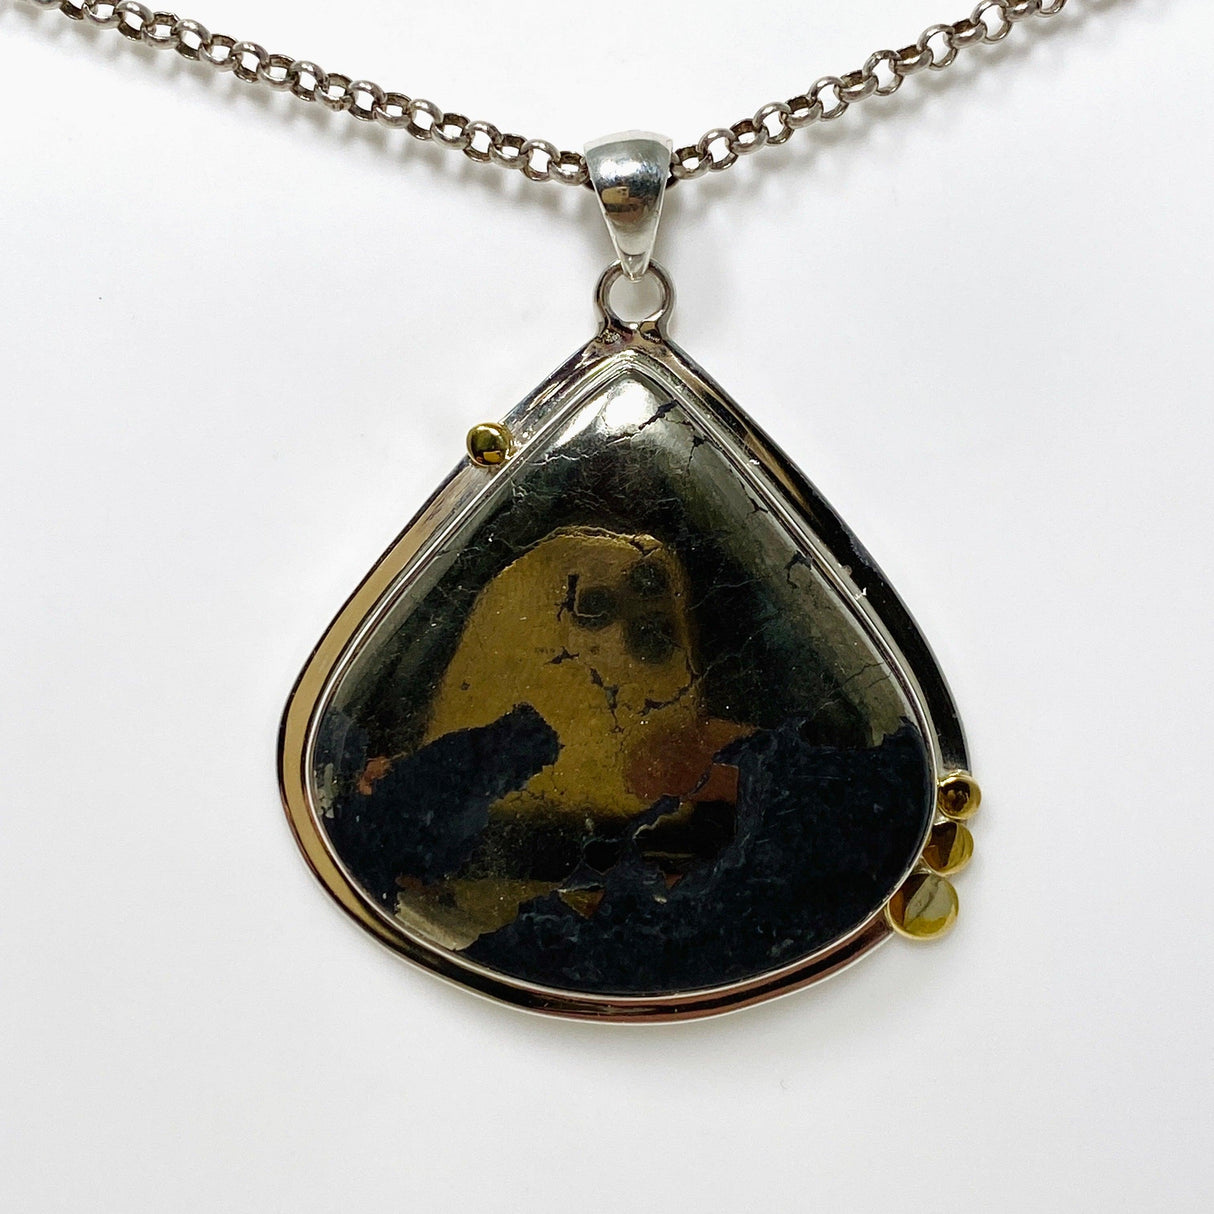 Healer's Gold Teardrop Pendant with Brass Accents KPGJ4380 - Nature's Magick